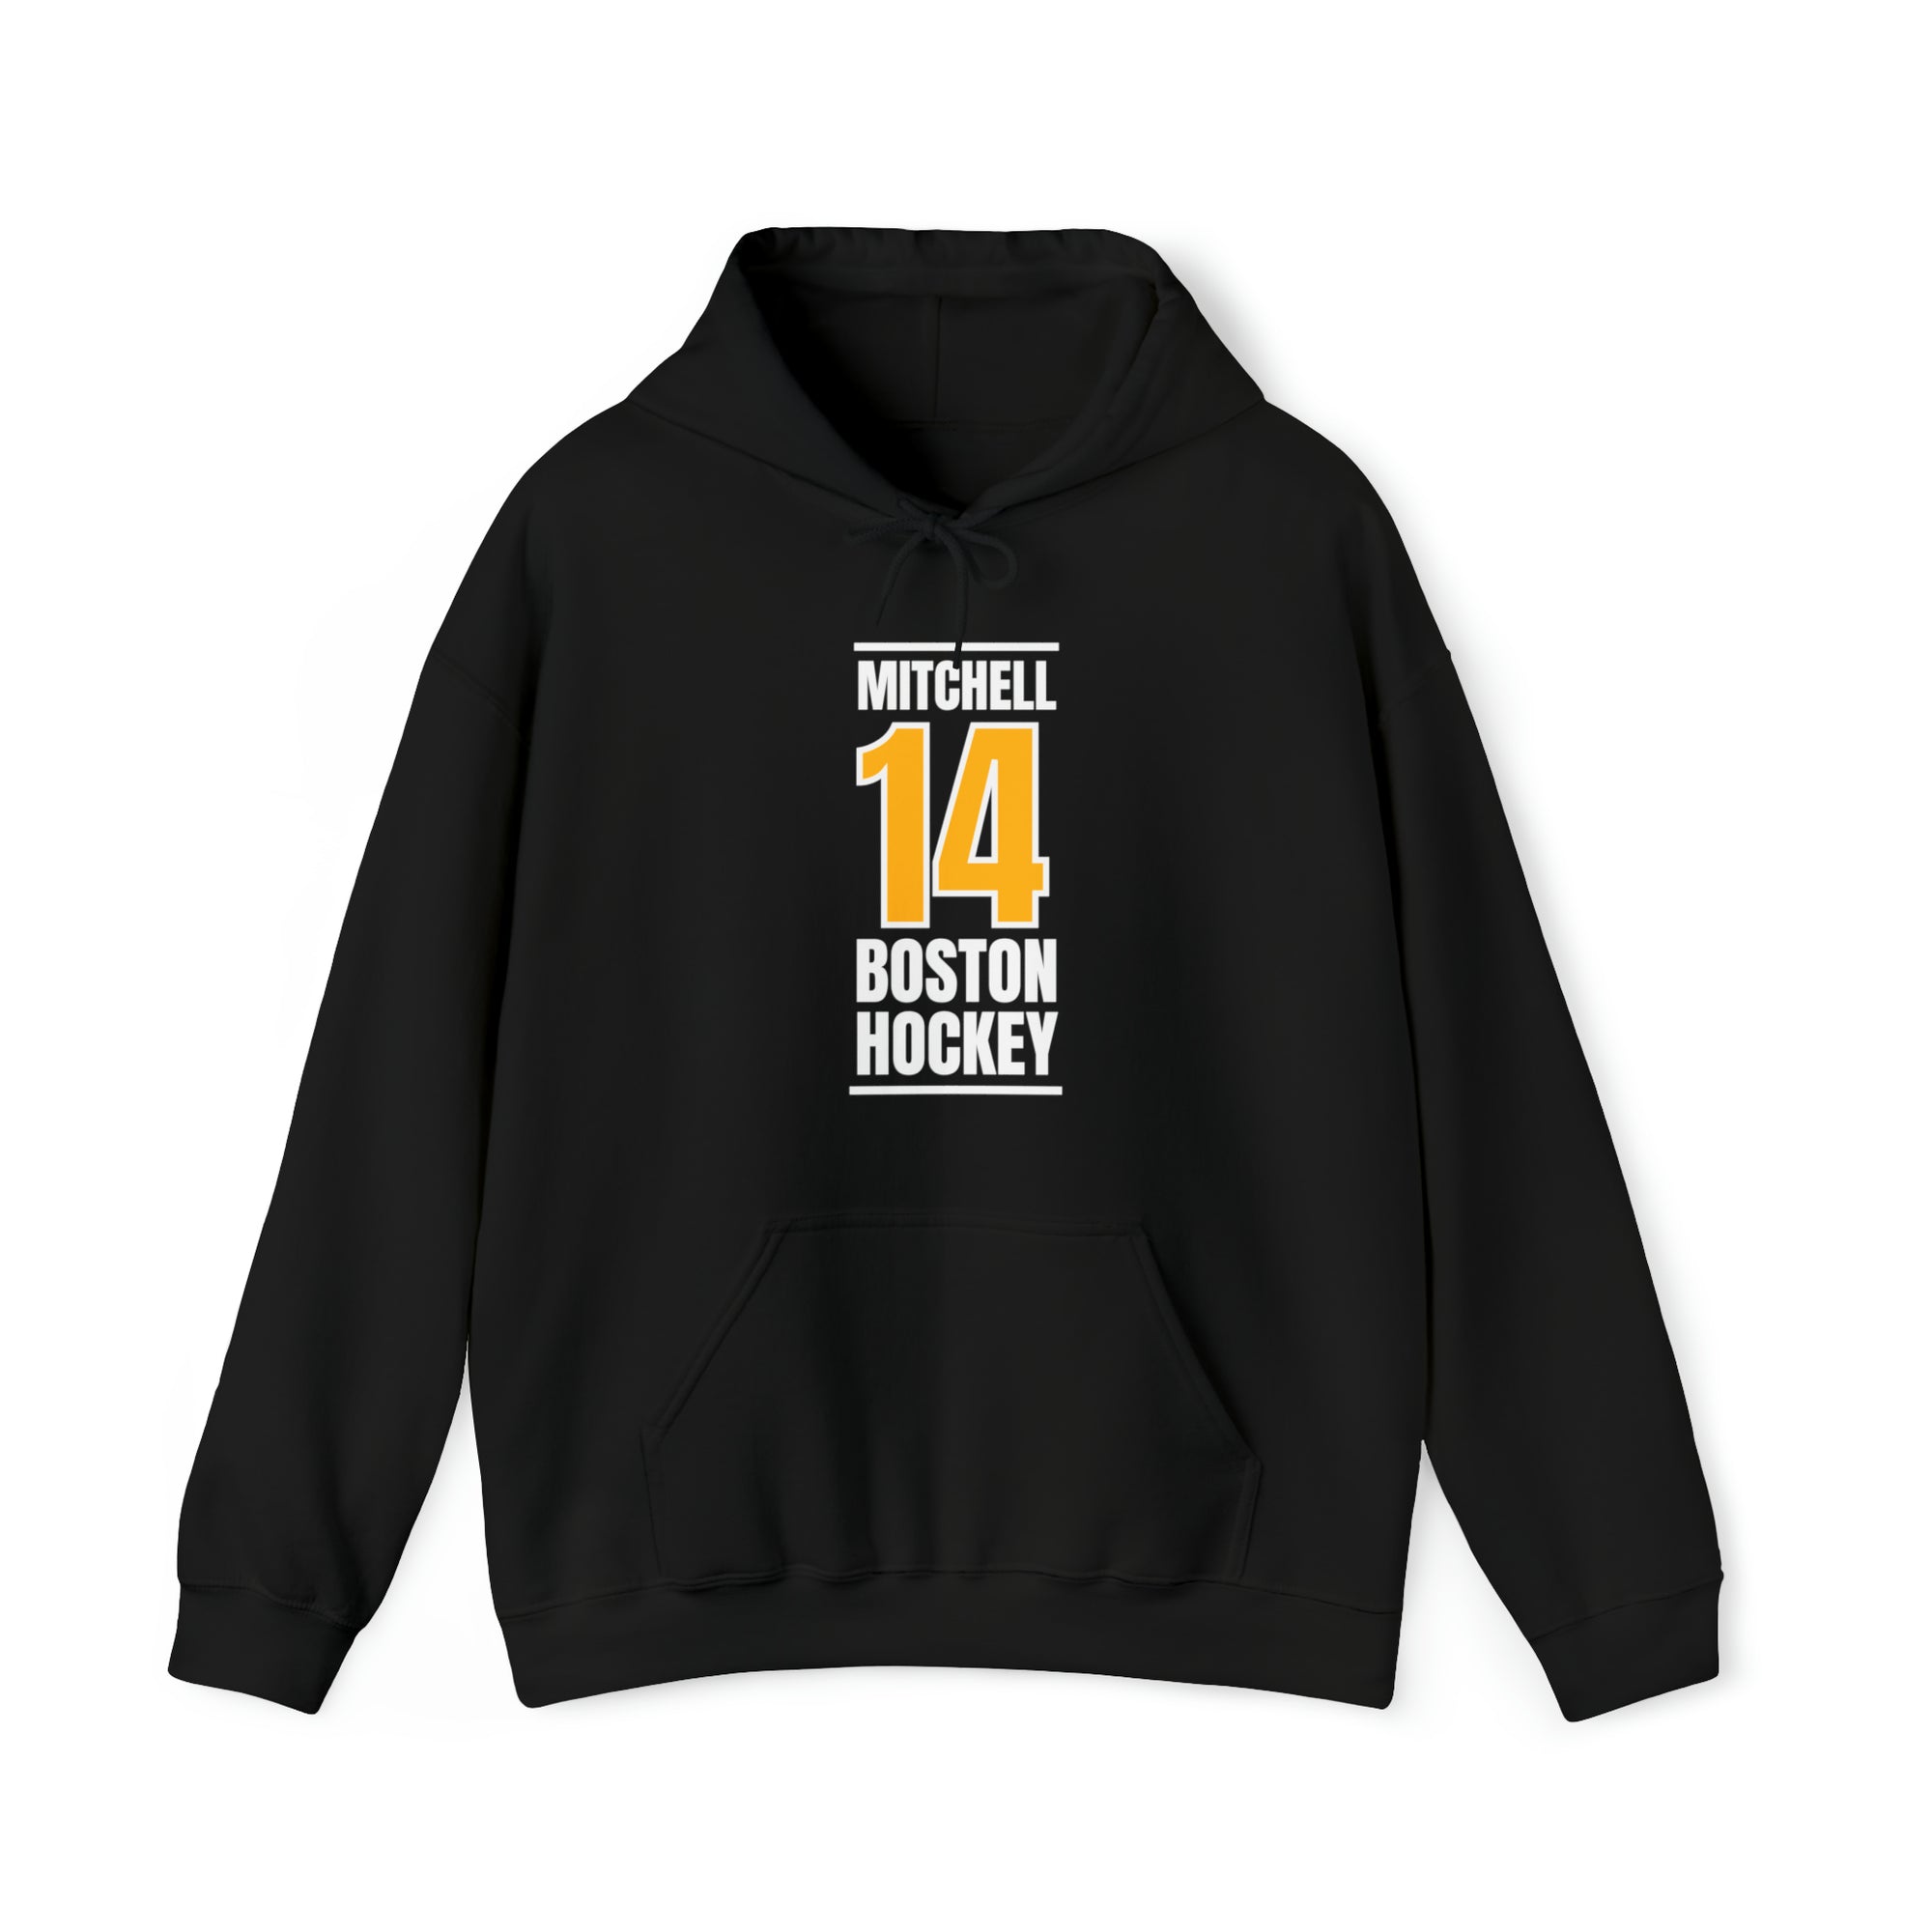 Mitchell 14 Boston Hockey Gold Vertical Design Unisex Hooded Sweatshirt